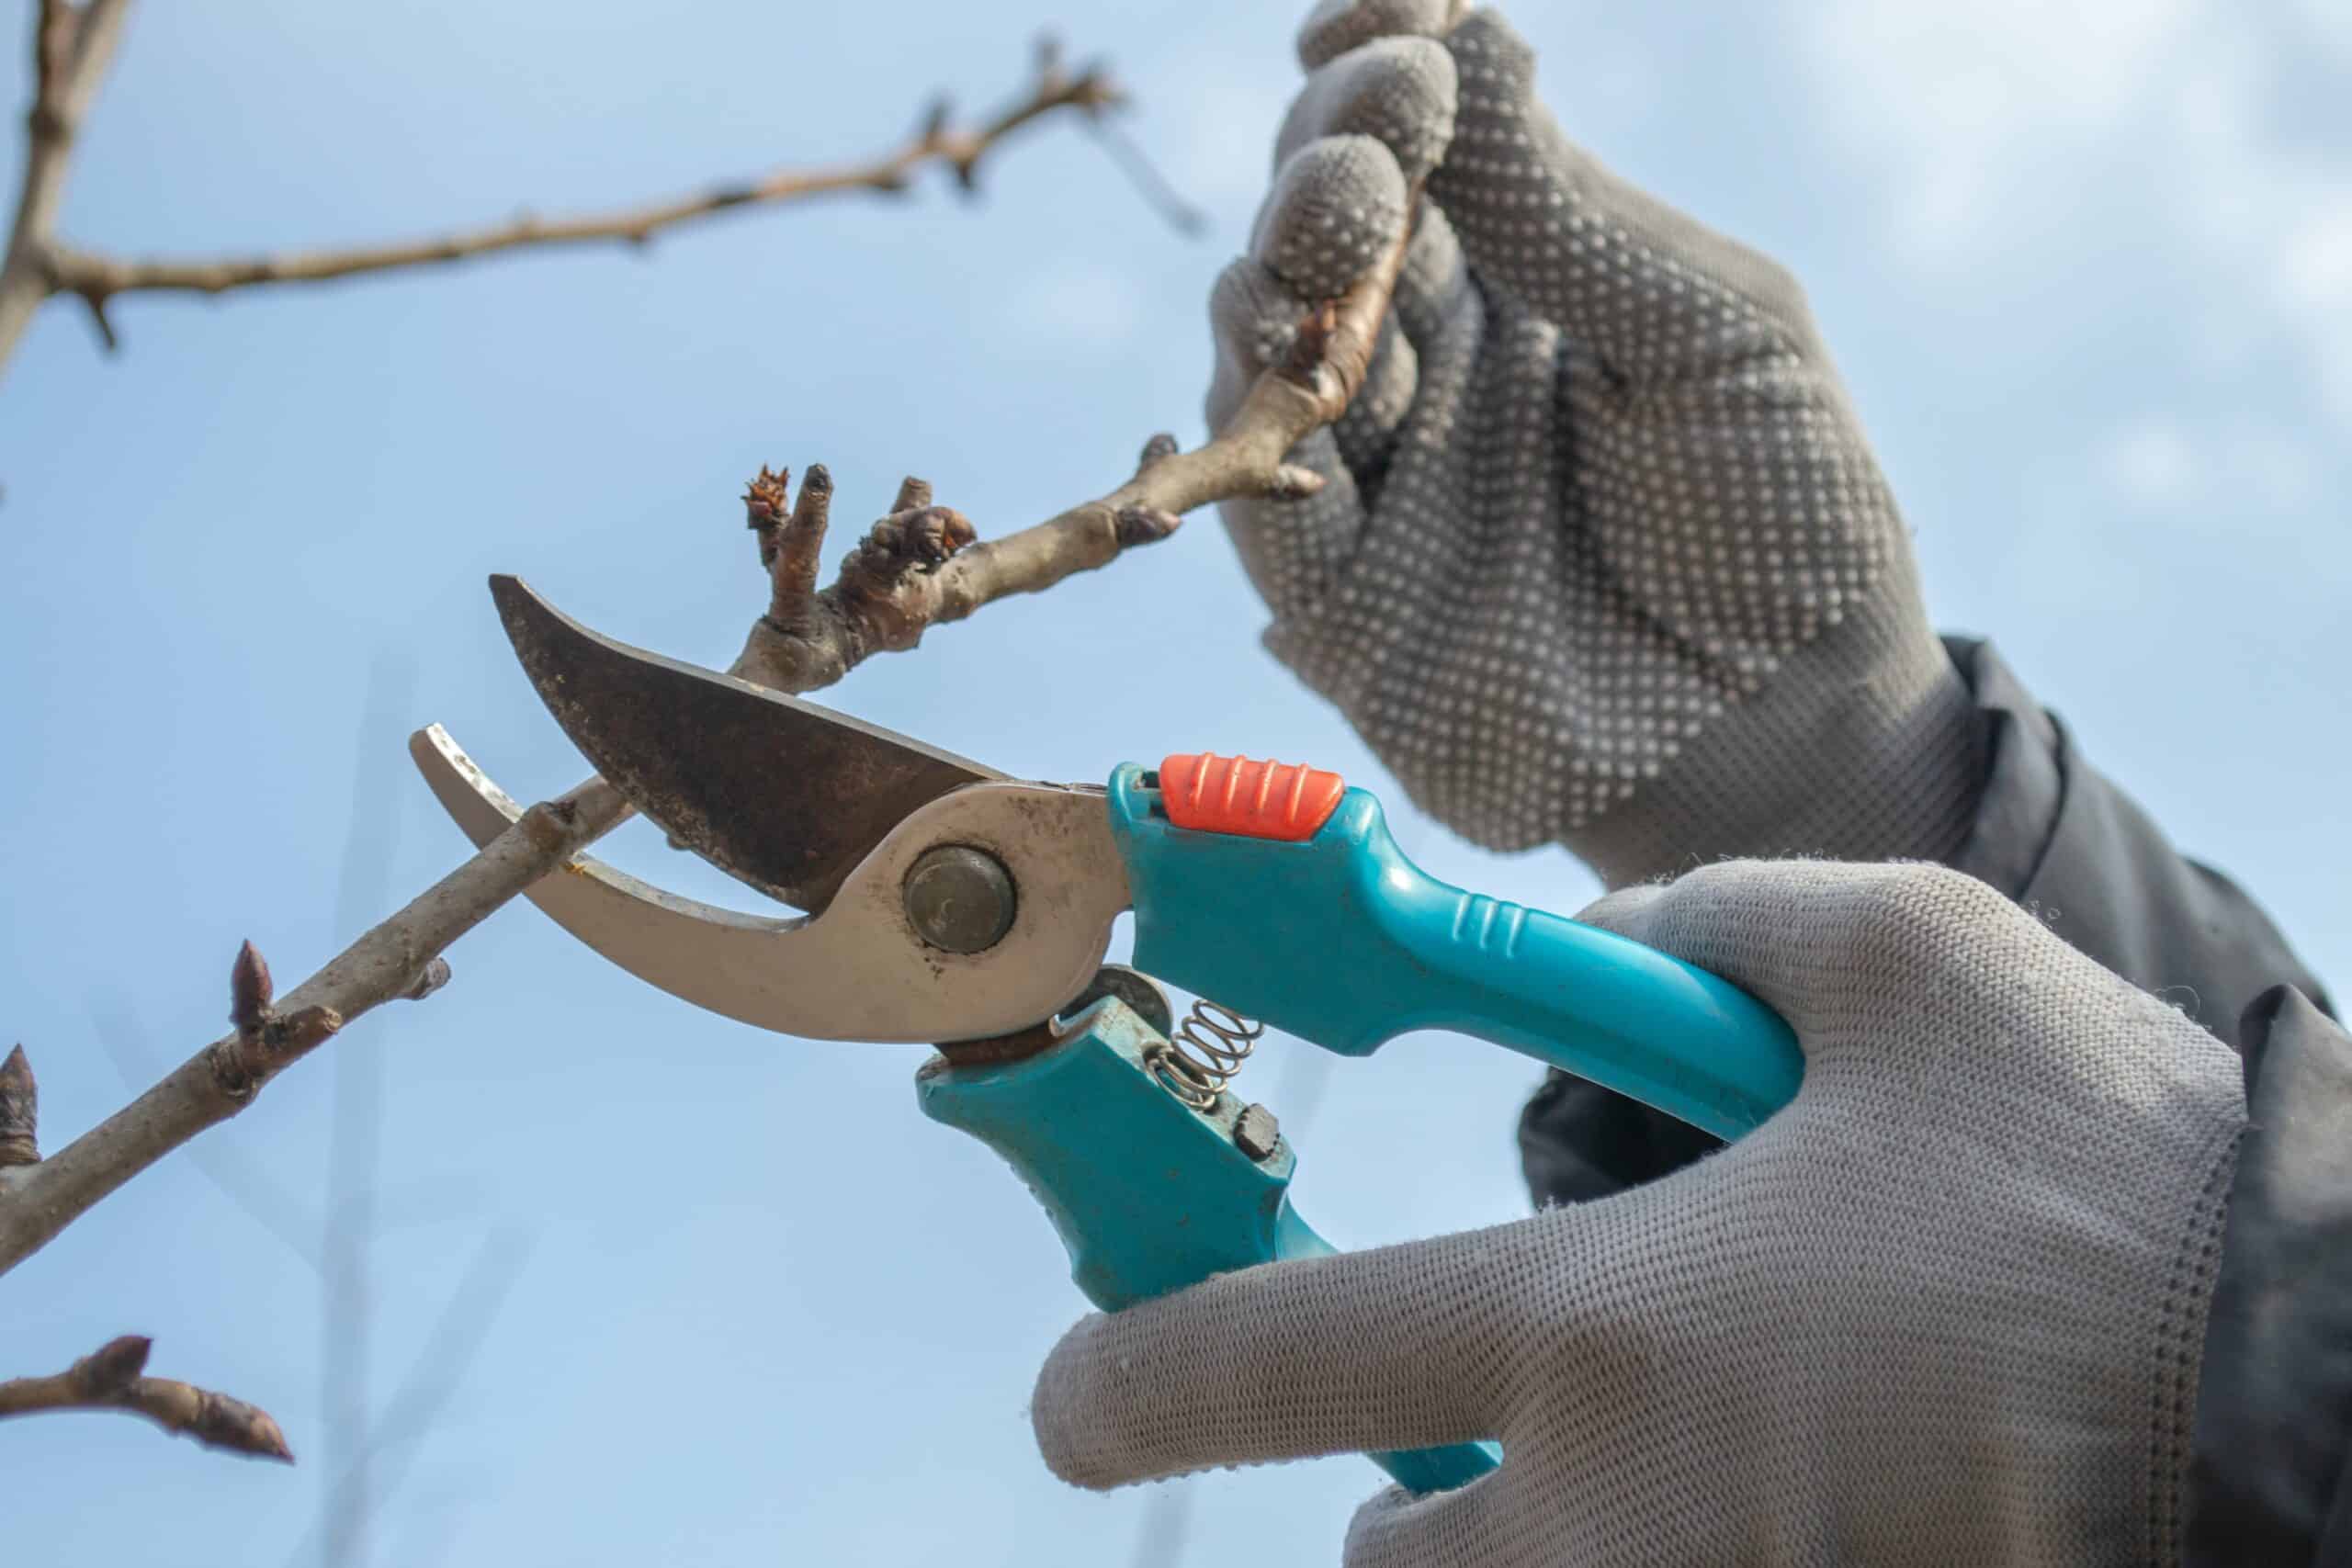 pruning an fruit tree cutting branches at spring 2022 07 22 07 42 31 utc min min